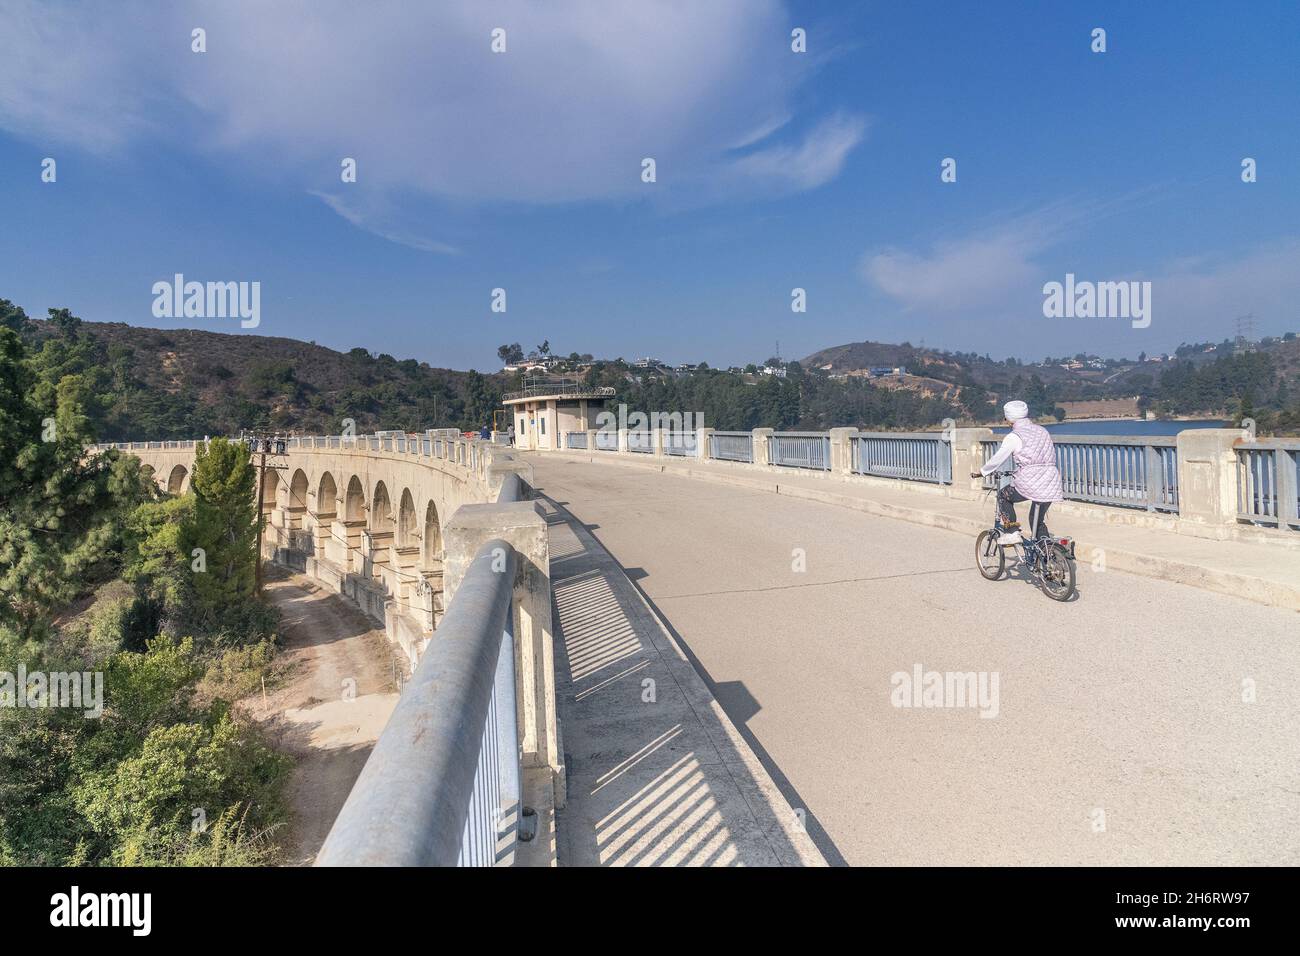 Los Angeles, CA, USA - November17, 2021: Un bicyclist attraversa il lago Hollywood attraverso la diga di Mulholland a Los Angeles, CA. Foto Stock